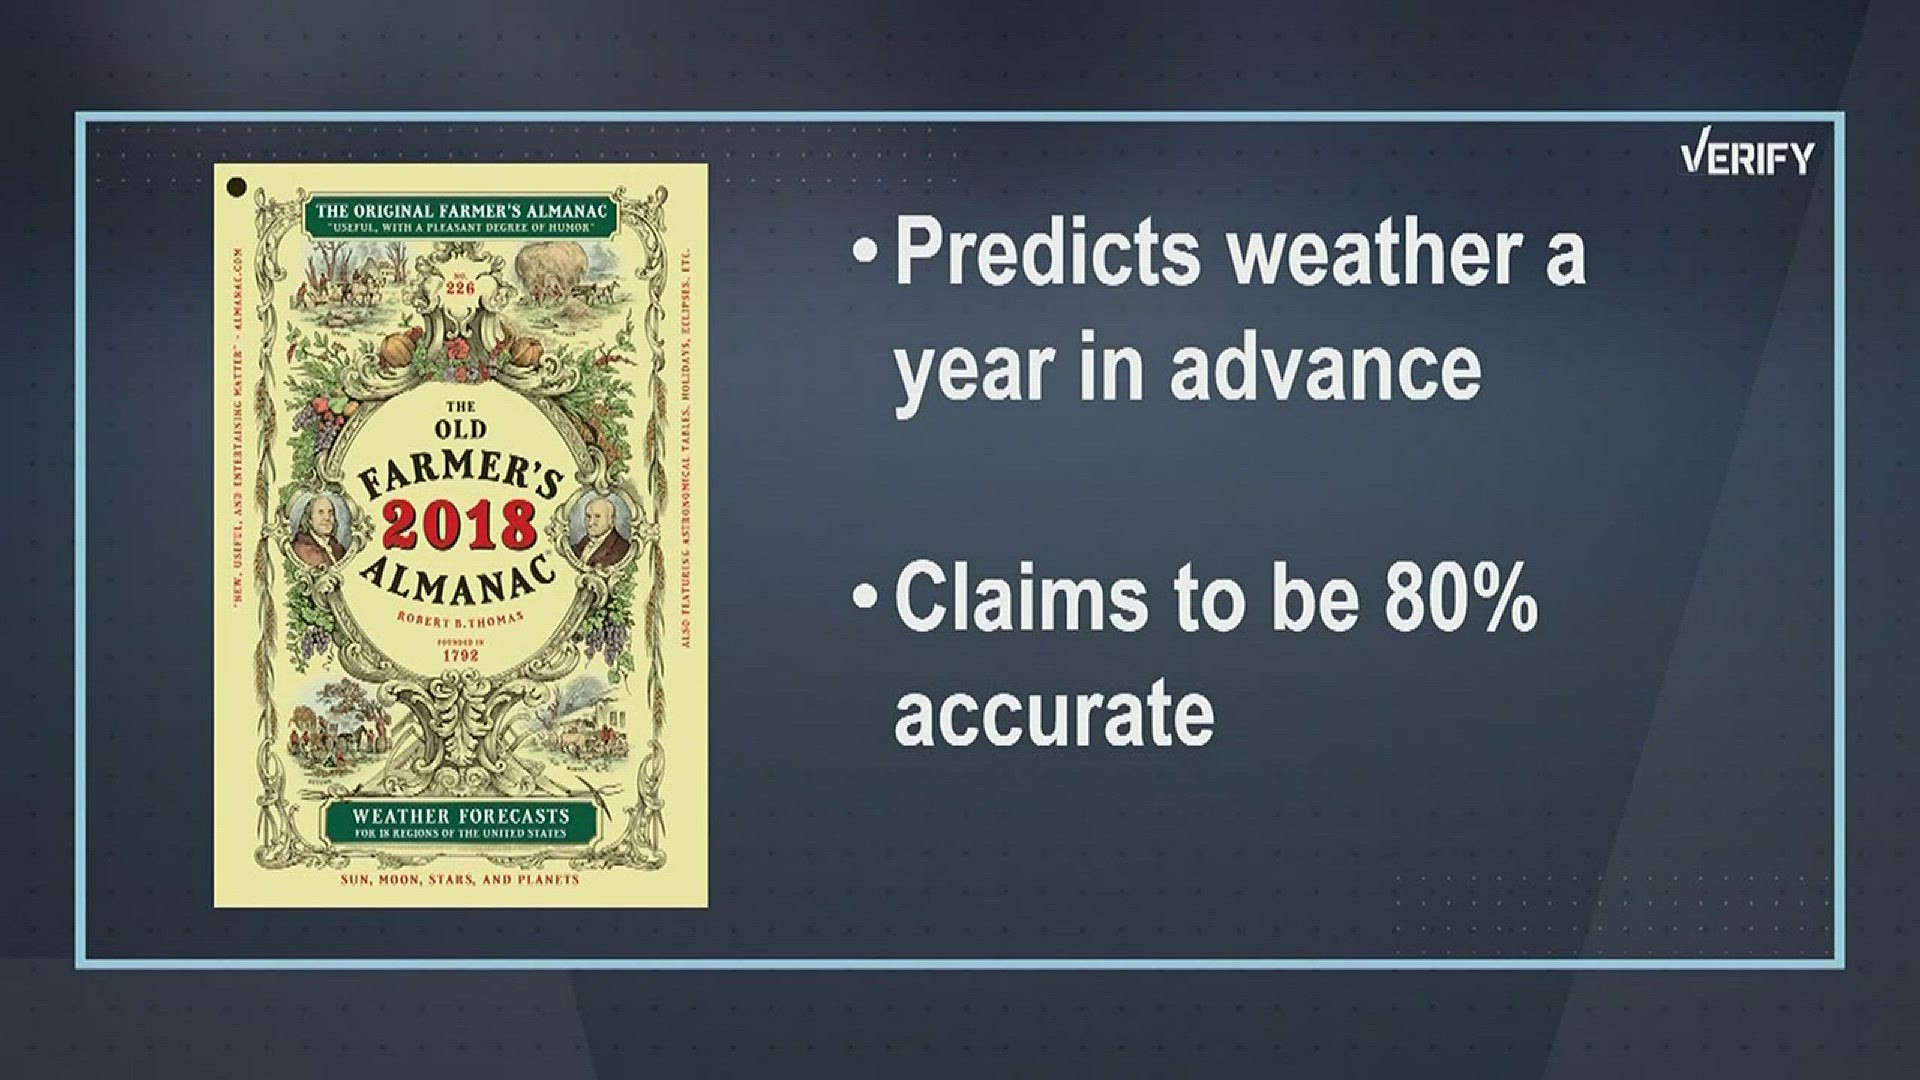 Verify: Is the Old Farmer's Almanac accurate?